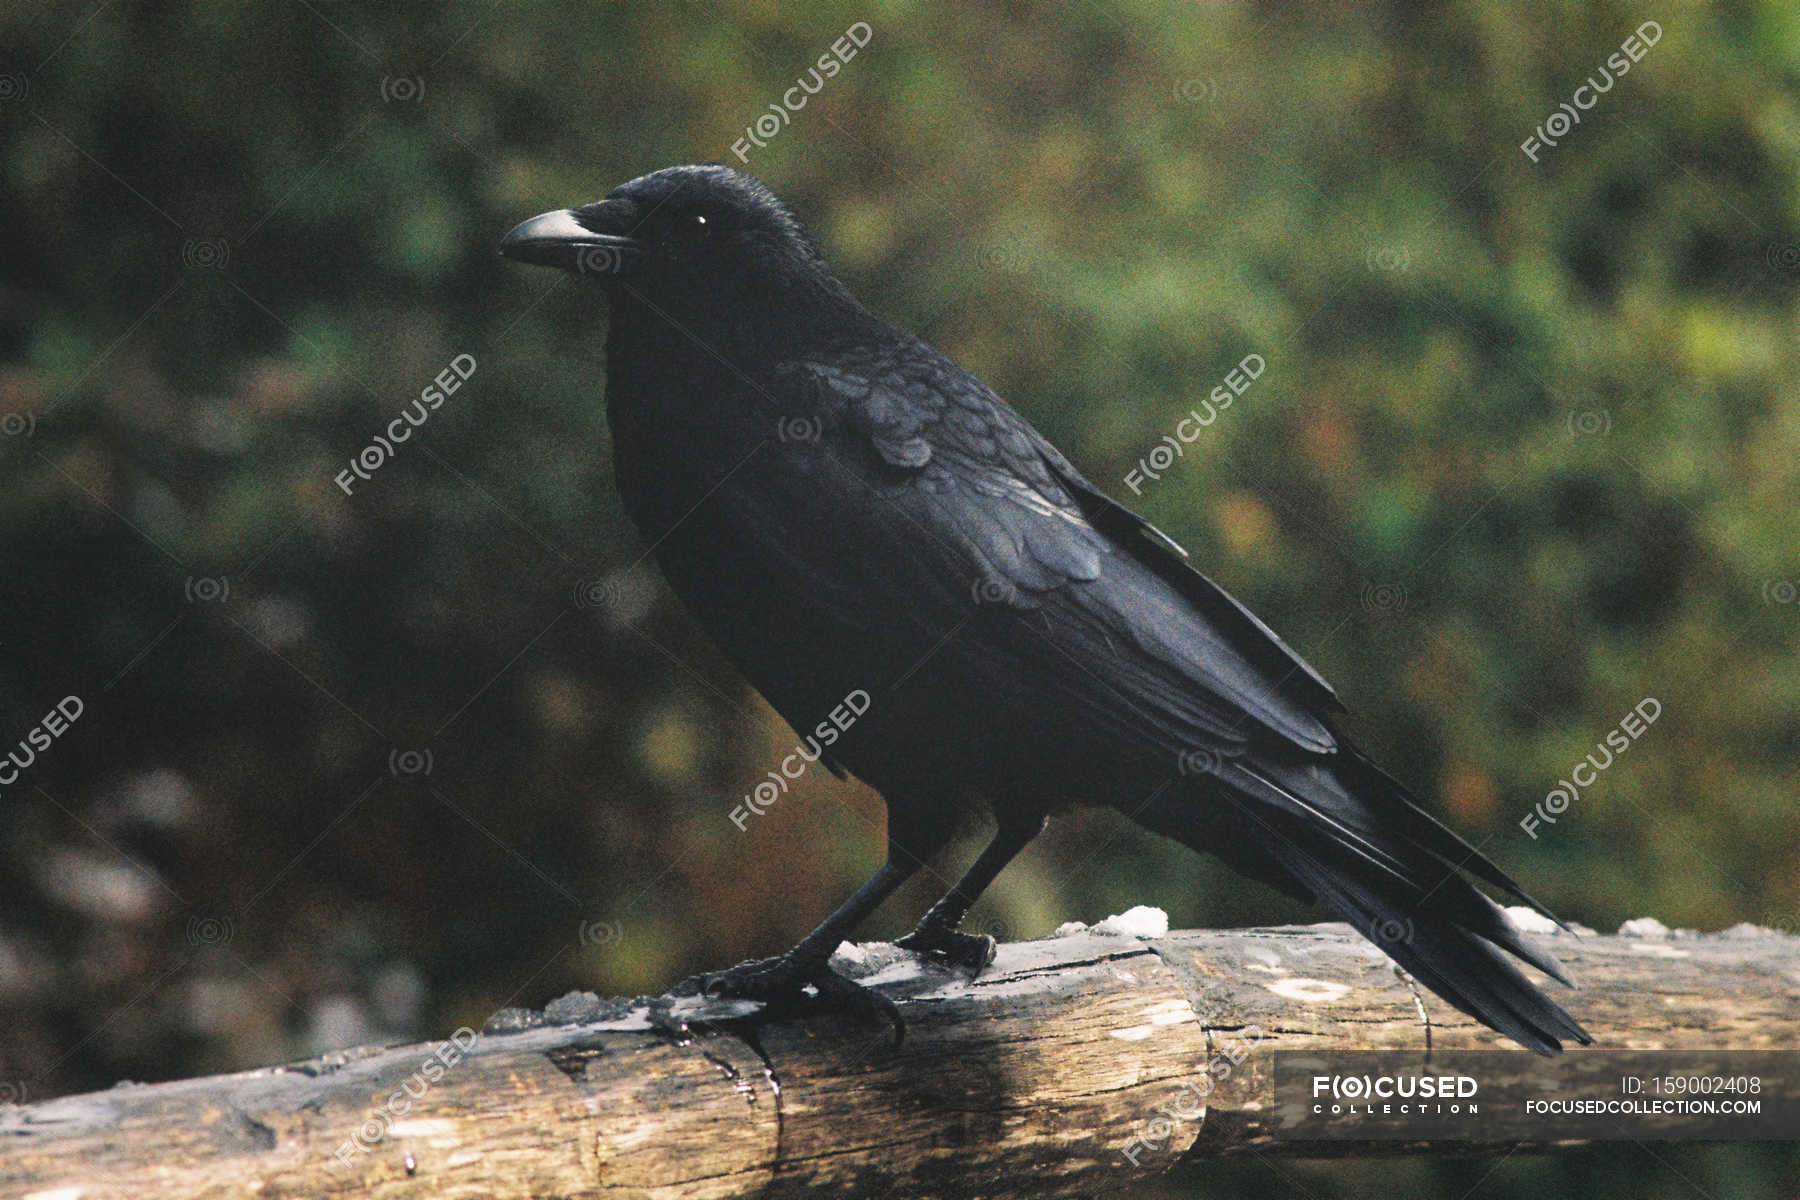 Black crow sitting on branch — Stock Photo | #159002408